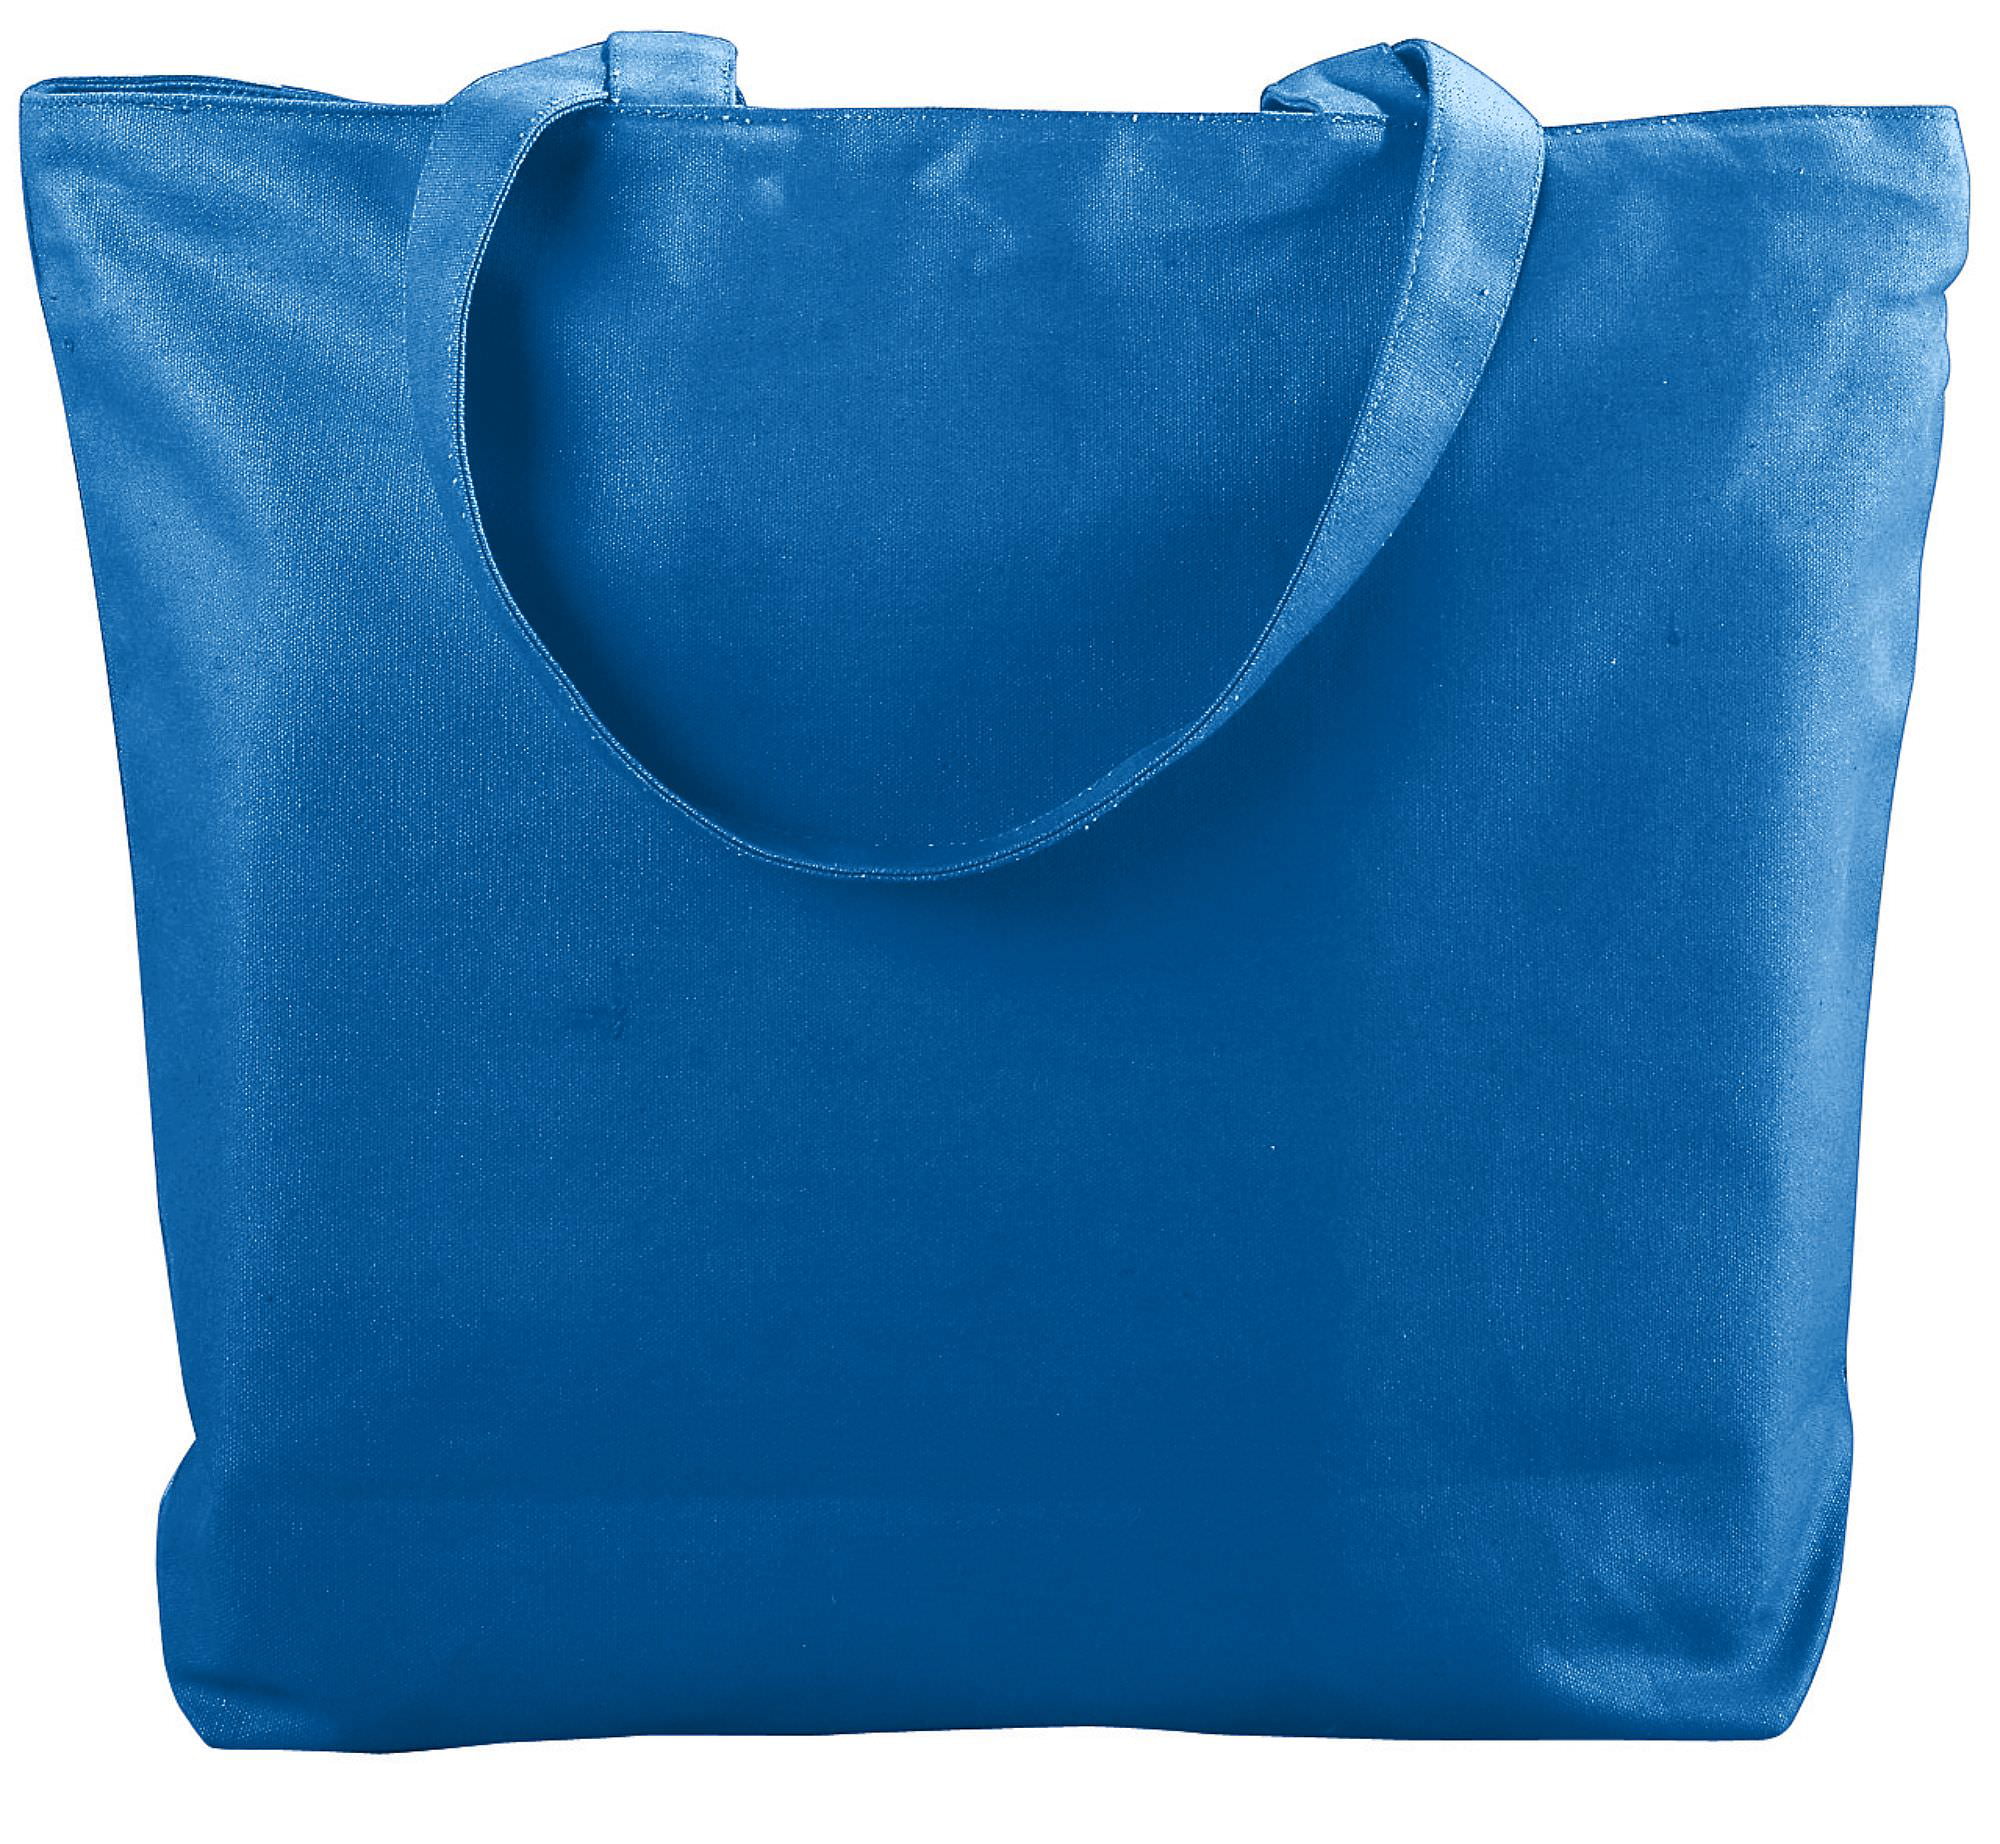 Jennifer Coral Reef Under Sea PU Leather Top-Handle Handbags Single-Shoulder Tote Crossbody Bag Messenger Bags For Women 